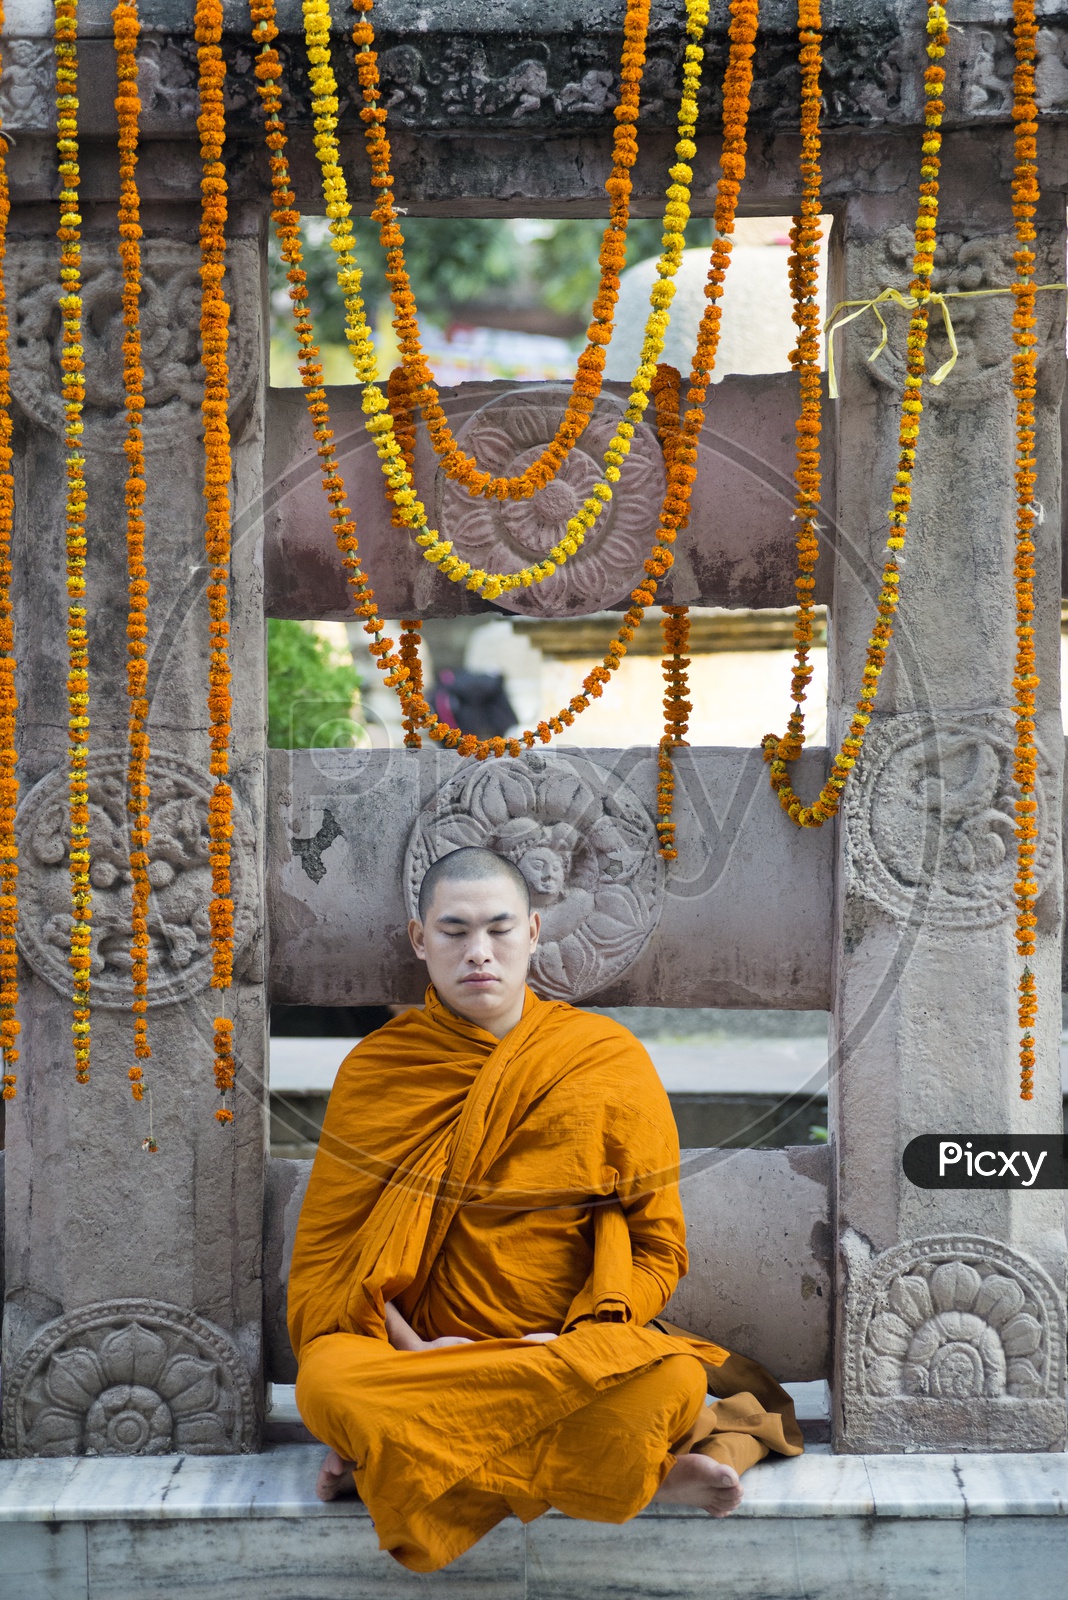 Buddhist Monk praying at Mahabodhi Temple, Bodh Gaya